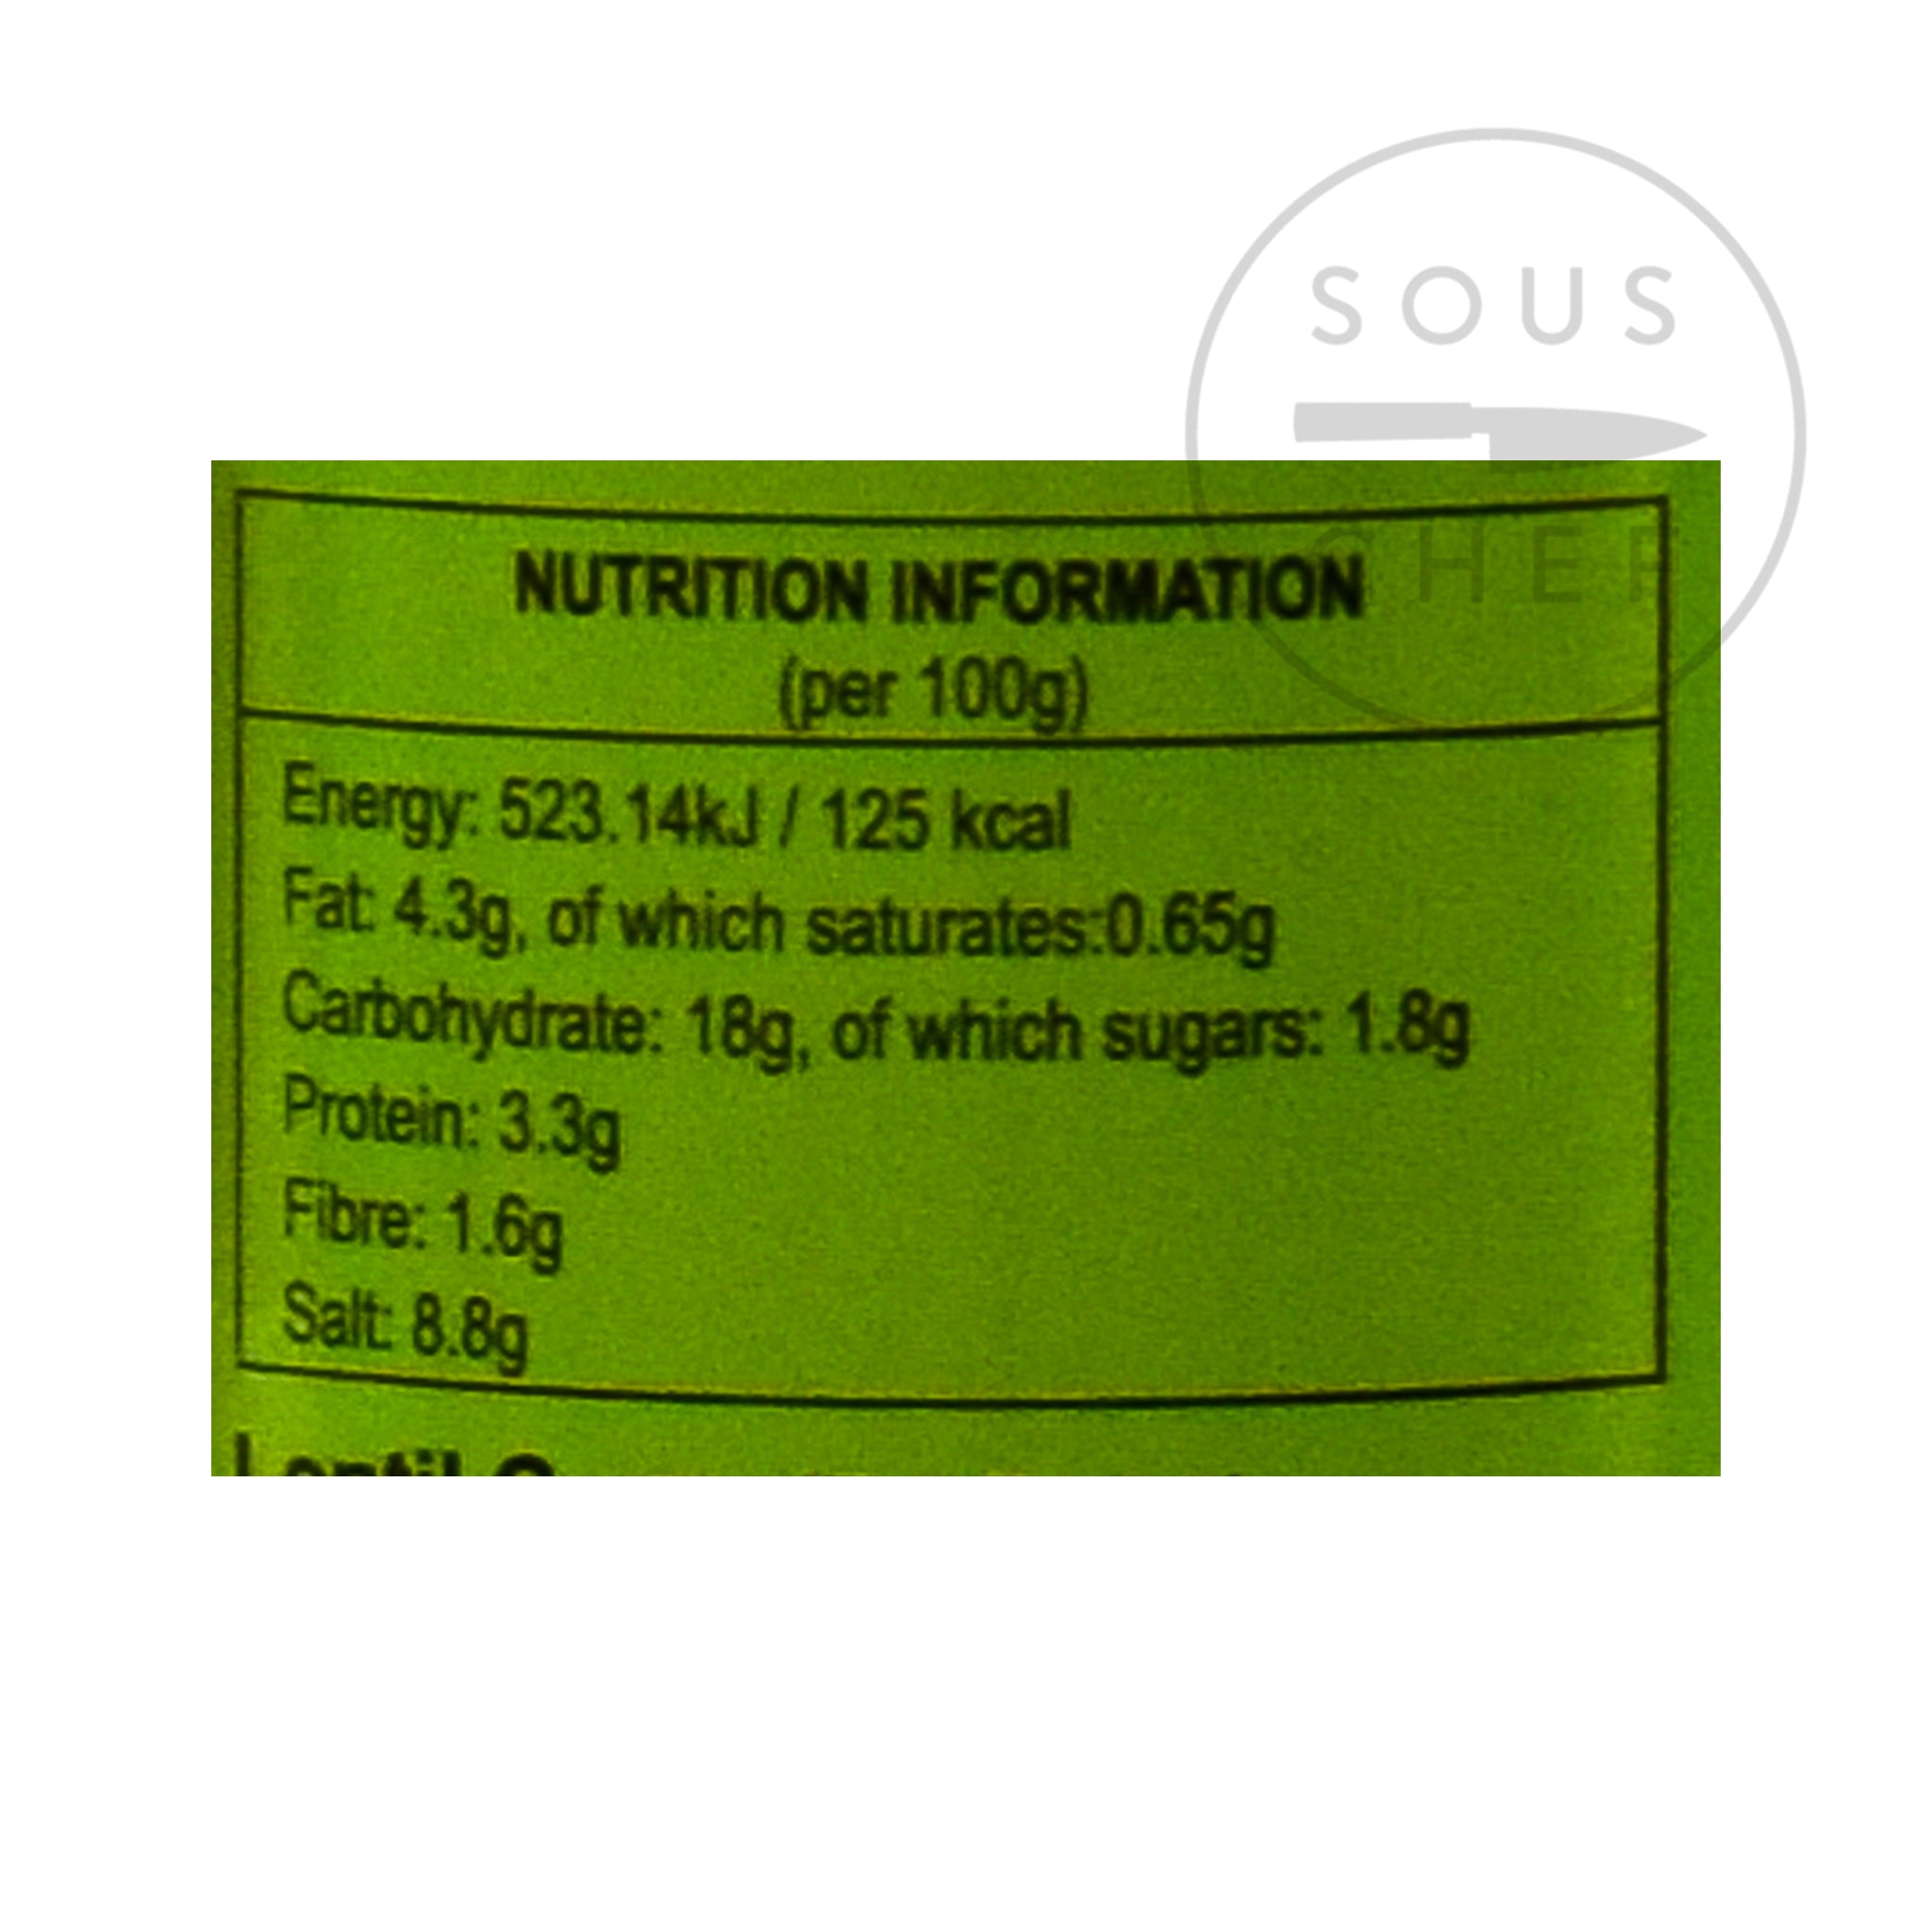 Ferns' Mild Curry Paste 380g nutritional information 